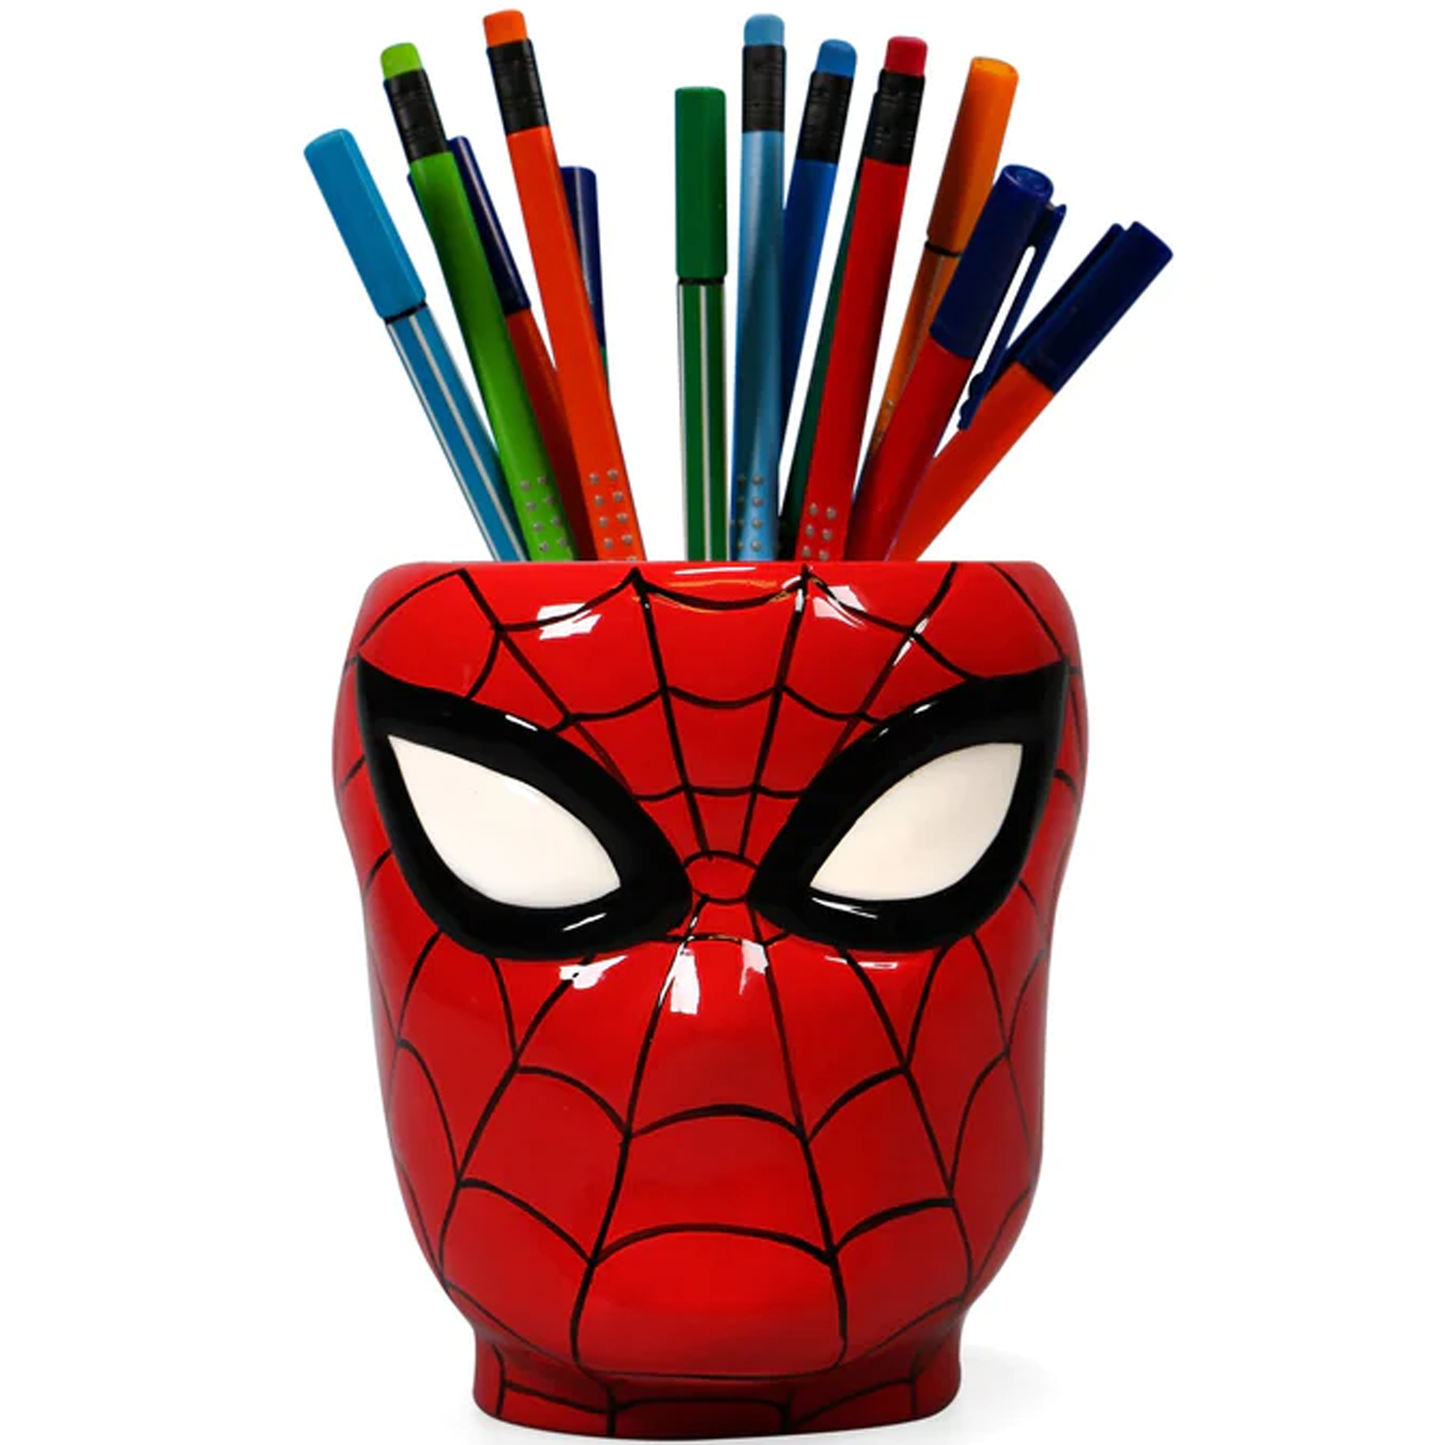 Marvel Spiderman Ceramic Wall Vase / Storage Organiser with Pencils in | Happy Piranha